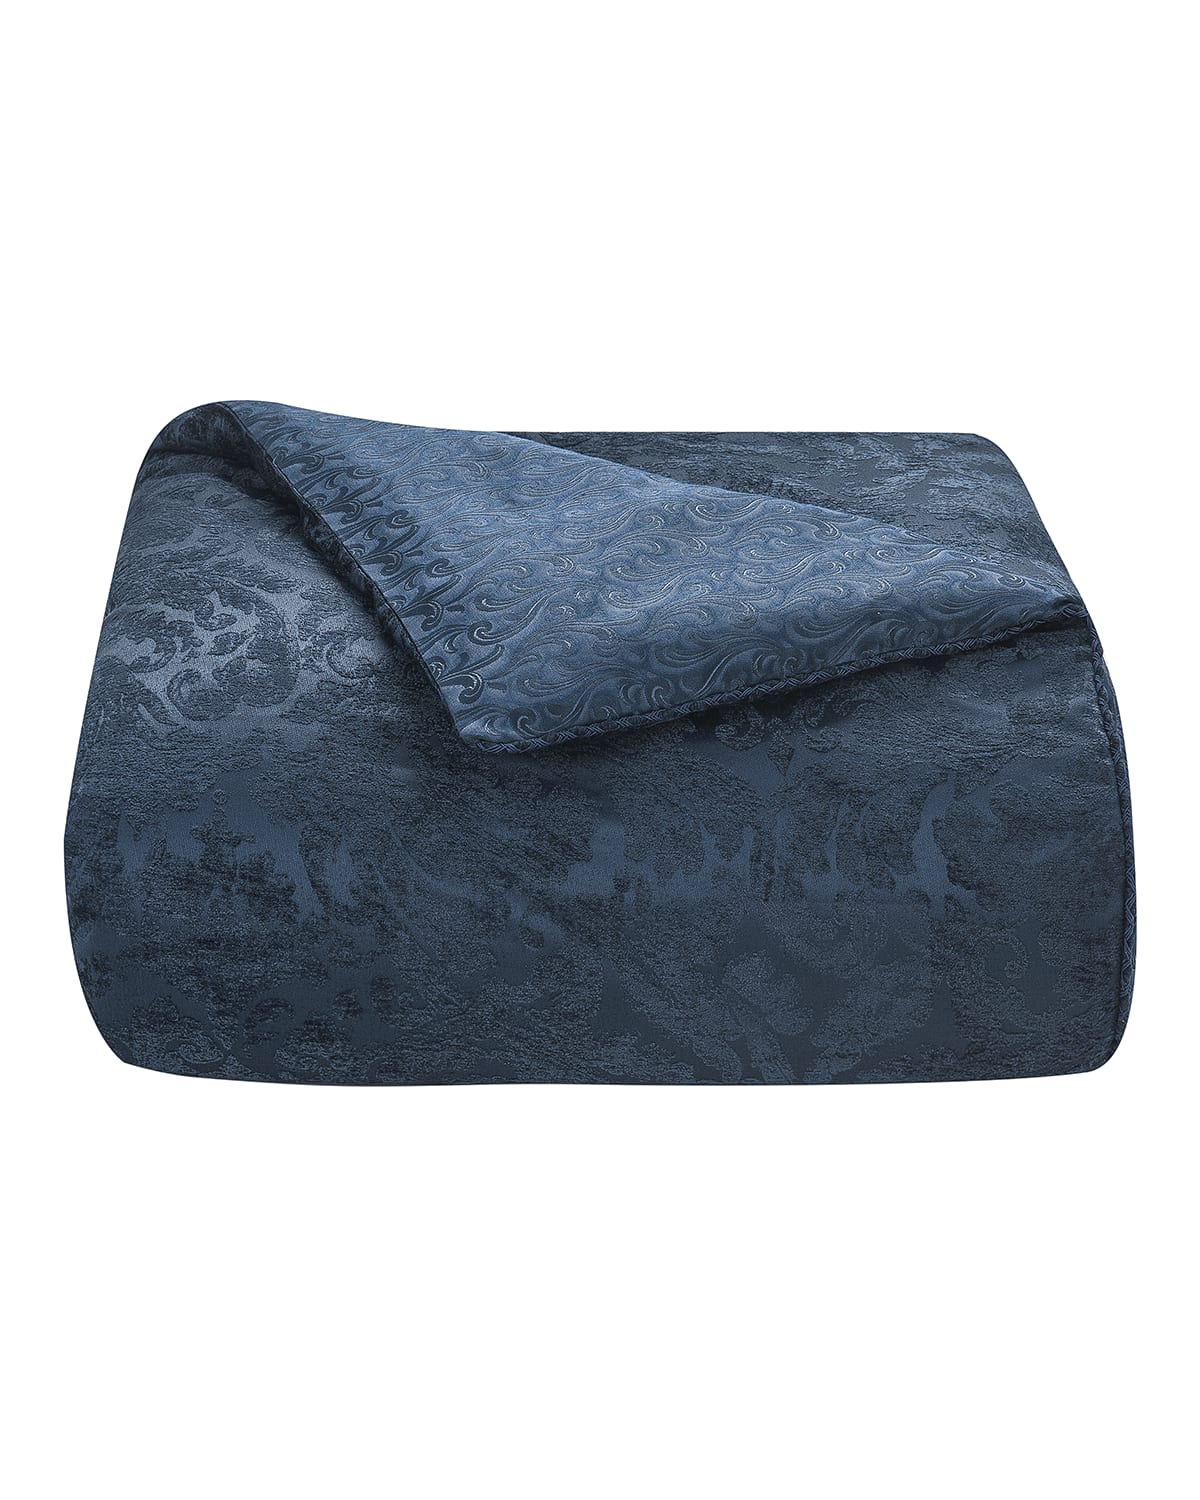 Image Waterford Leighton Queen Comforter Set